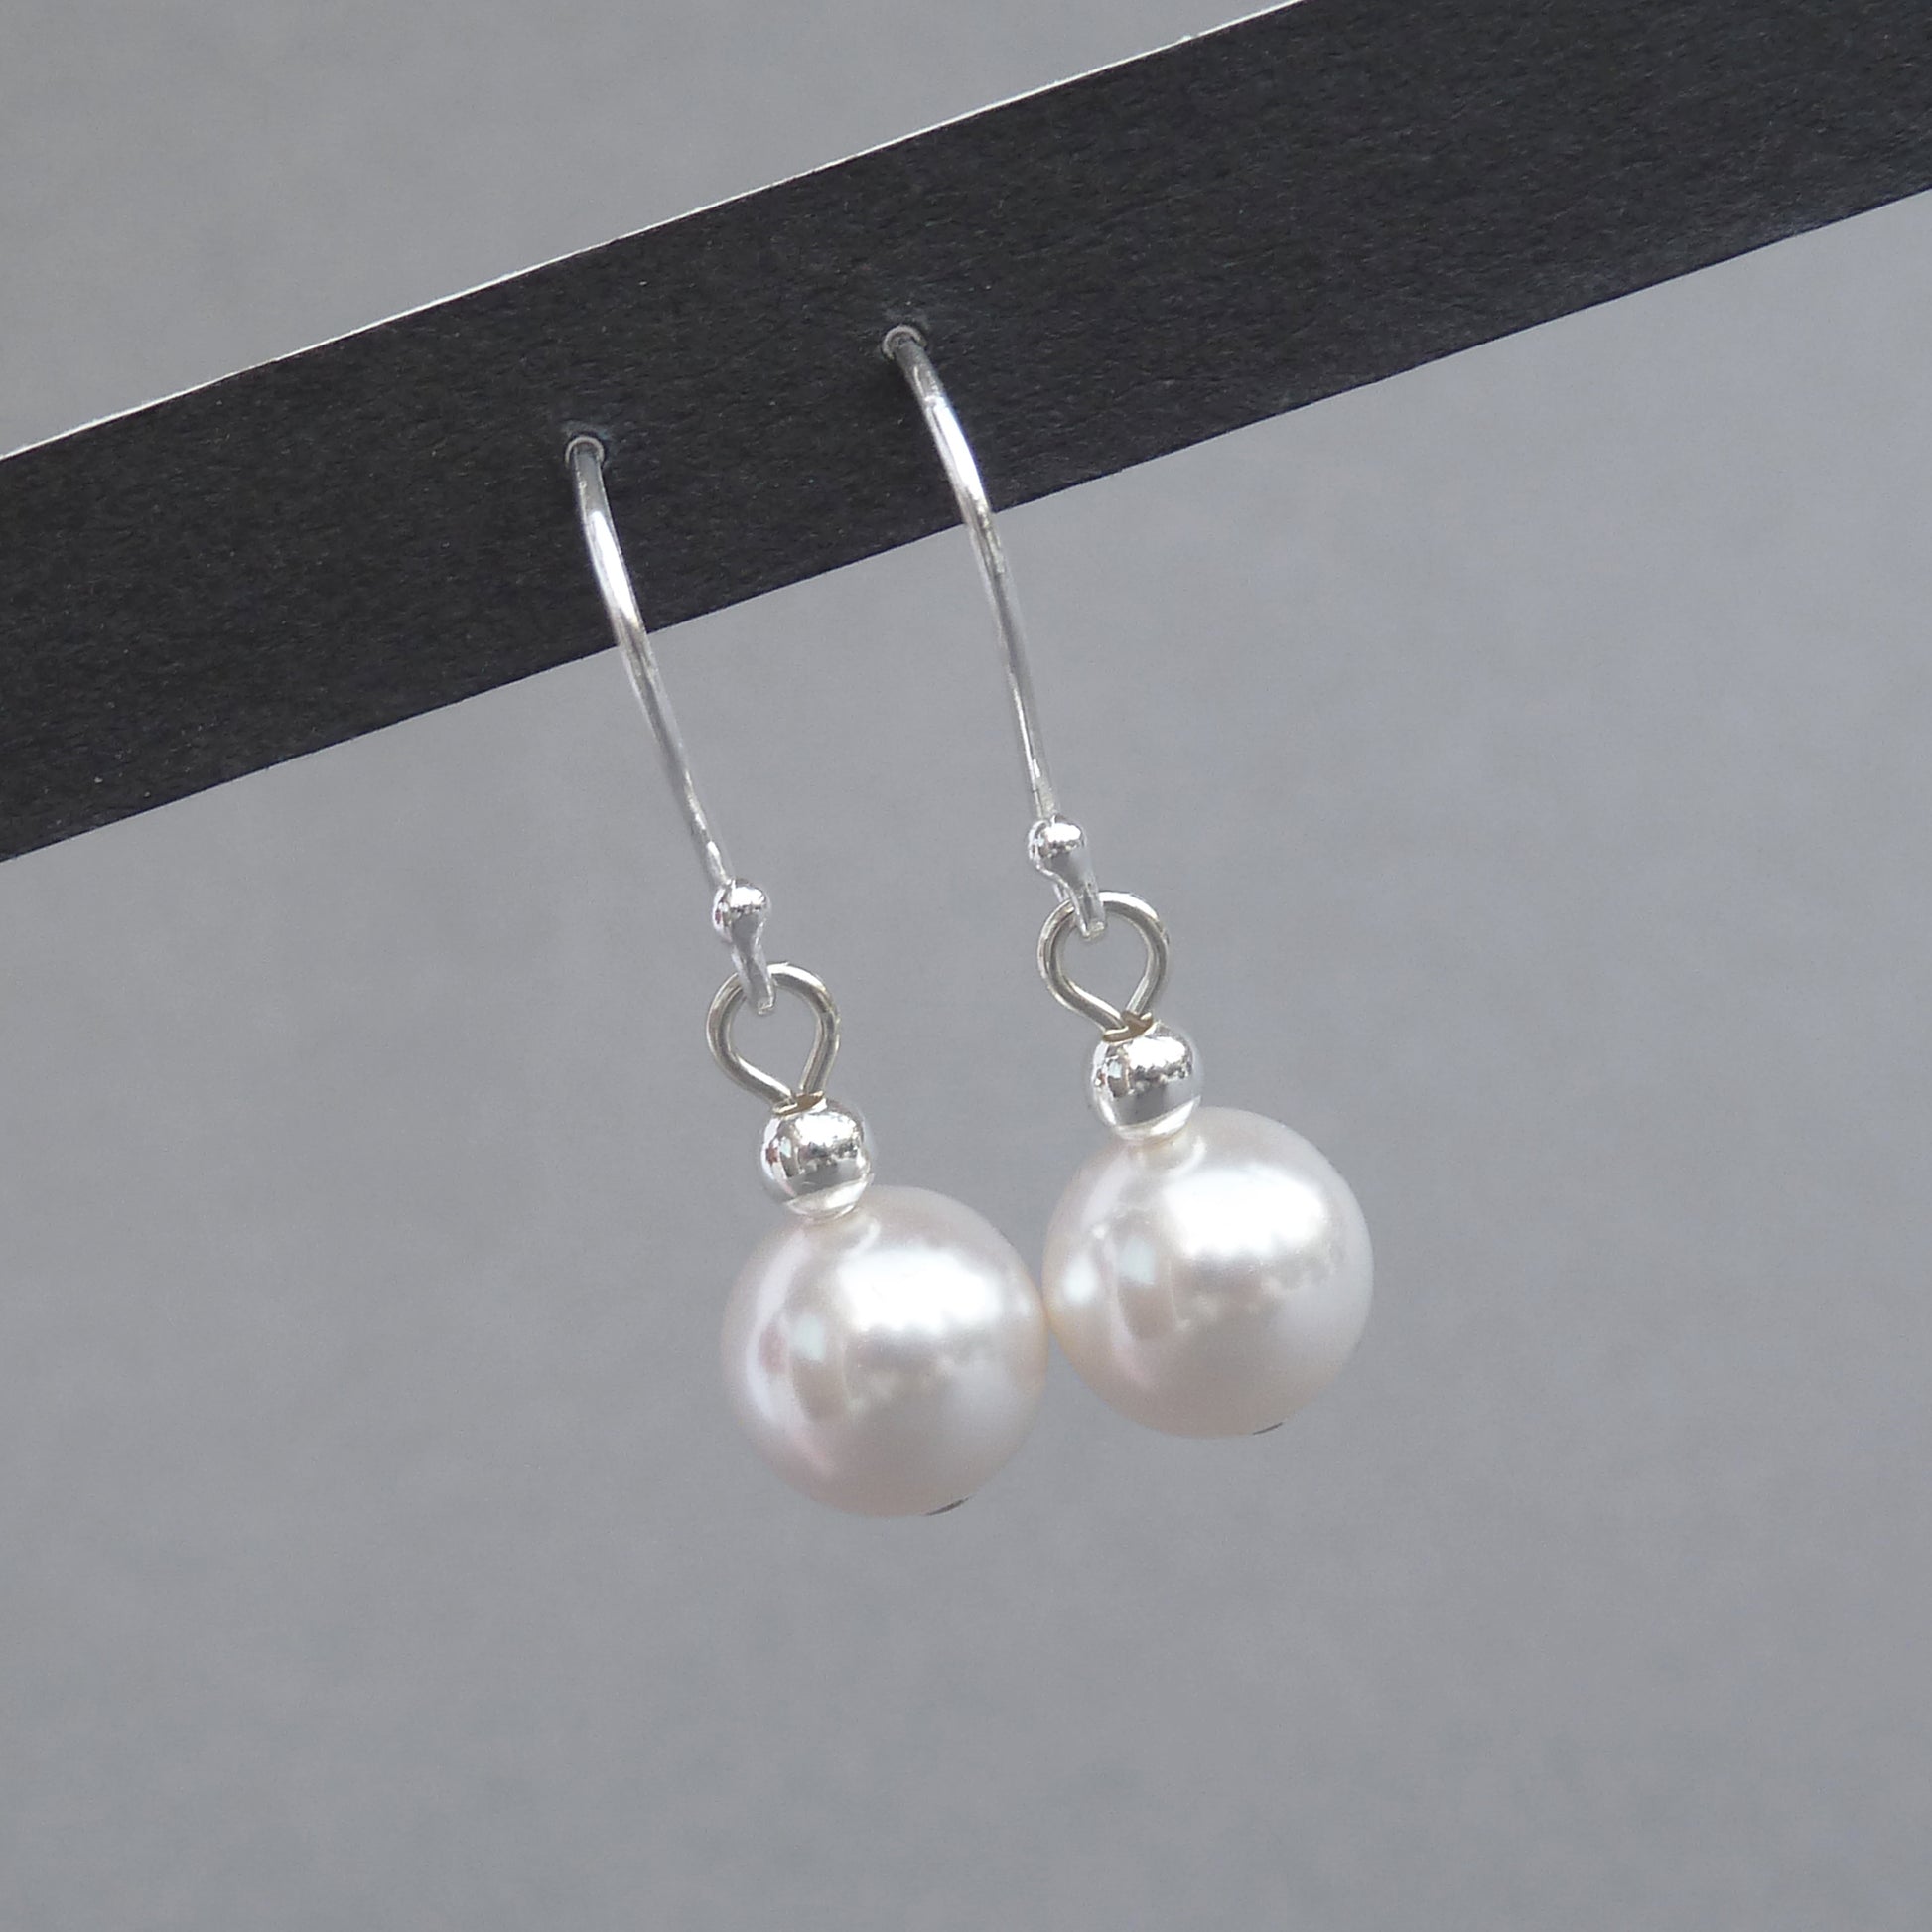 Everyday white pearl earrings